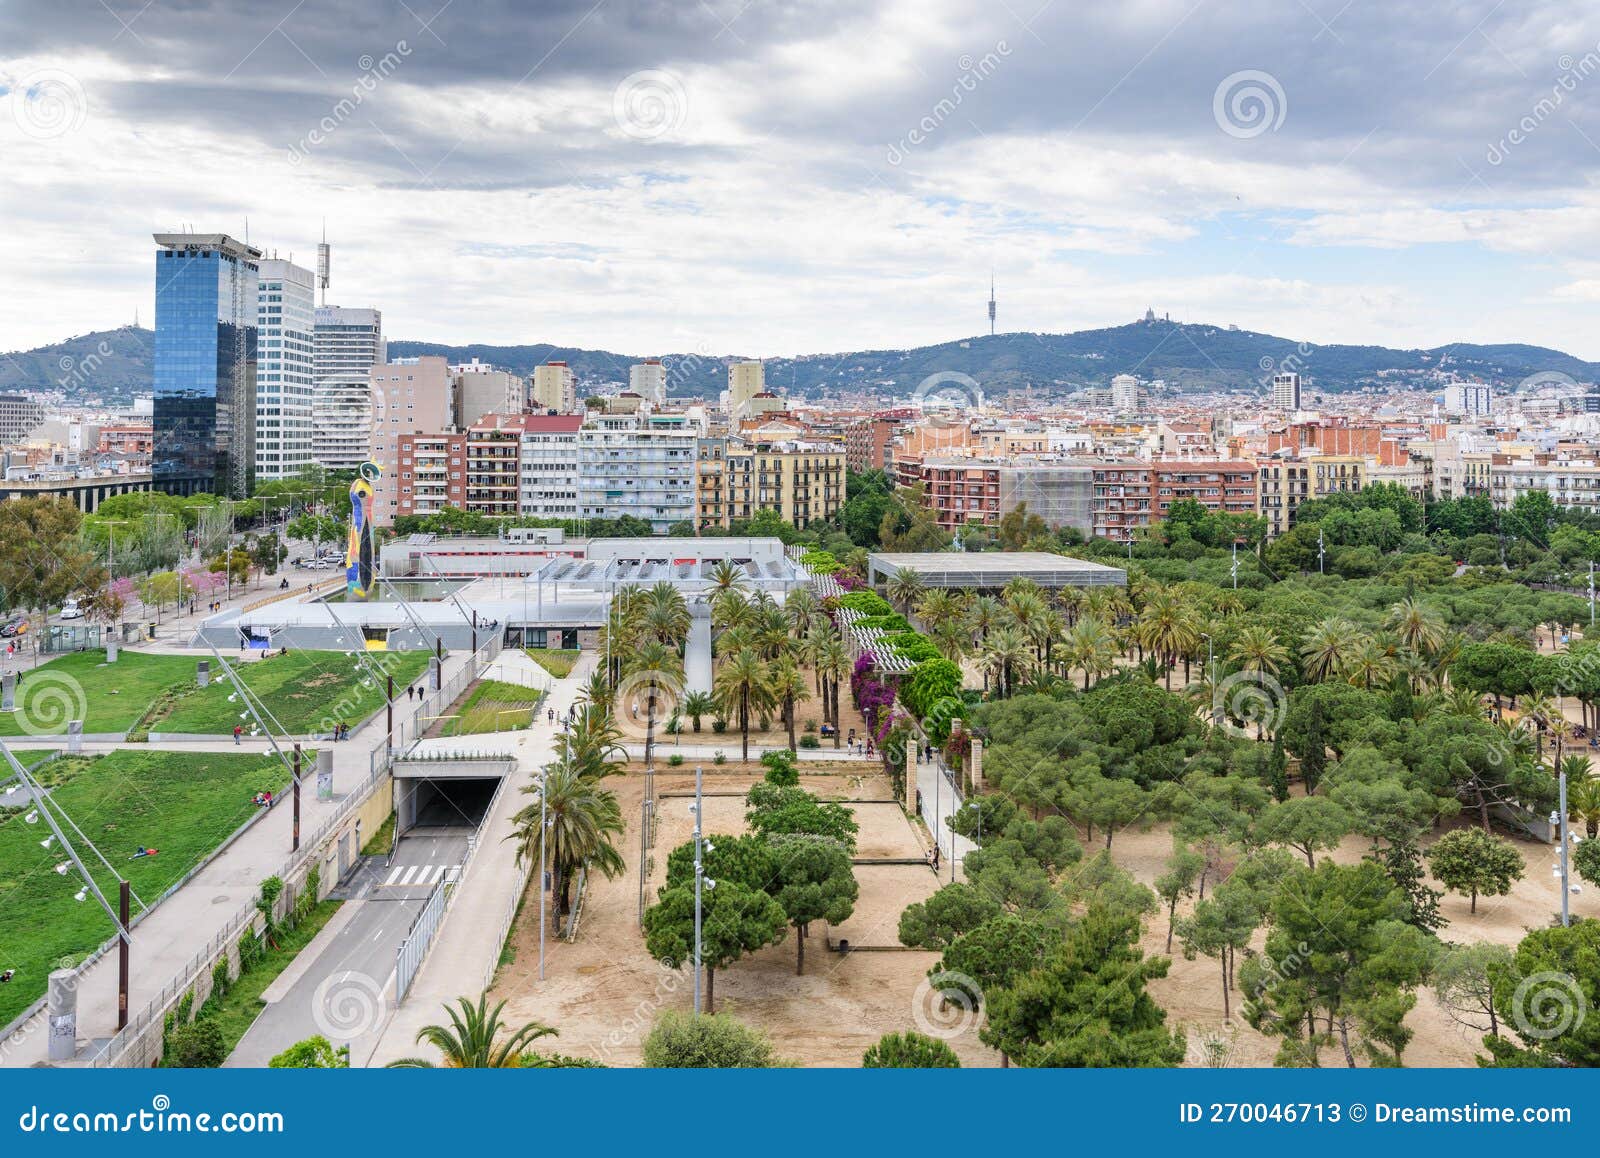 view north from the arena on plaza de espania across joan miro park. barcelona, europe